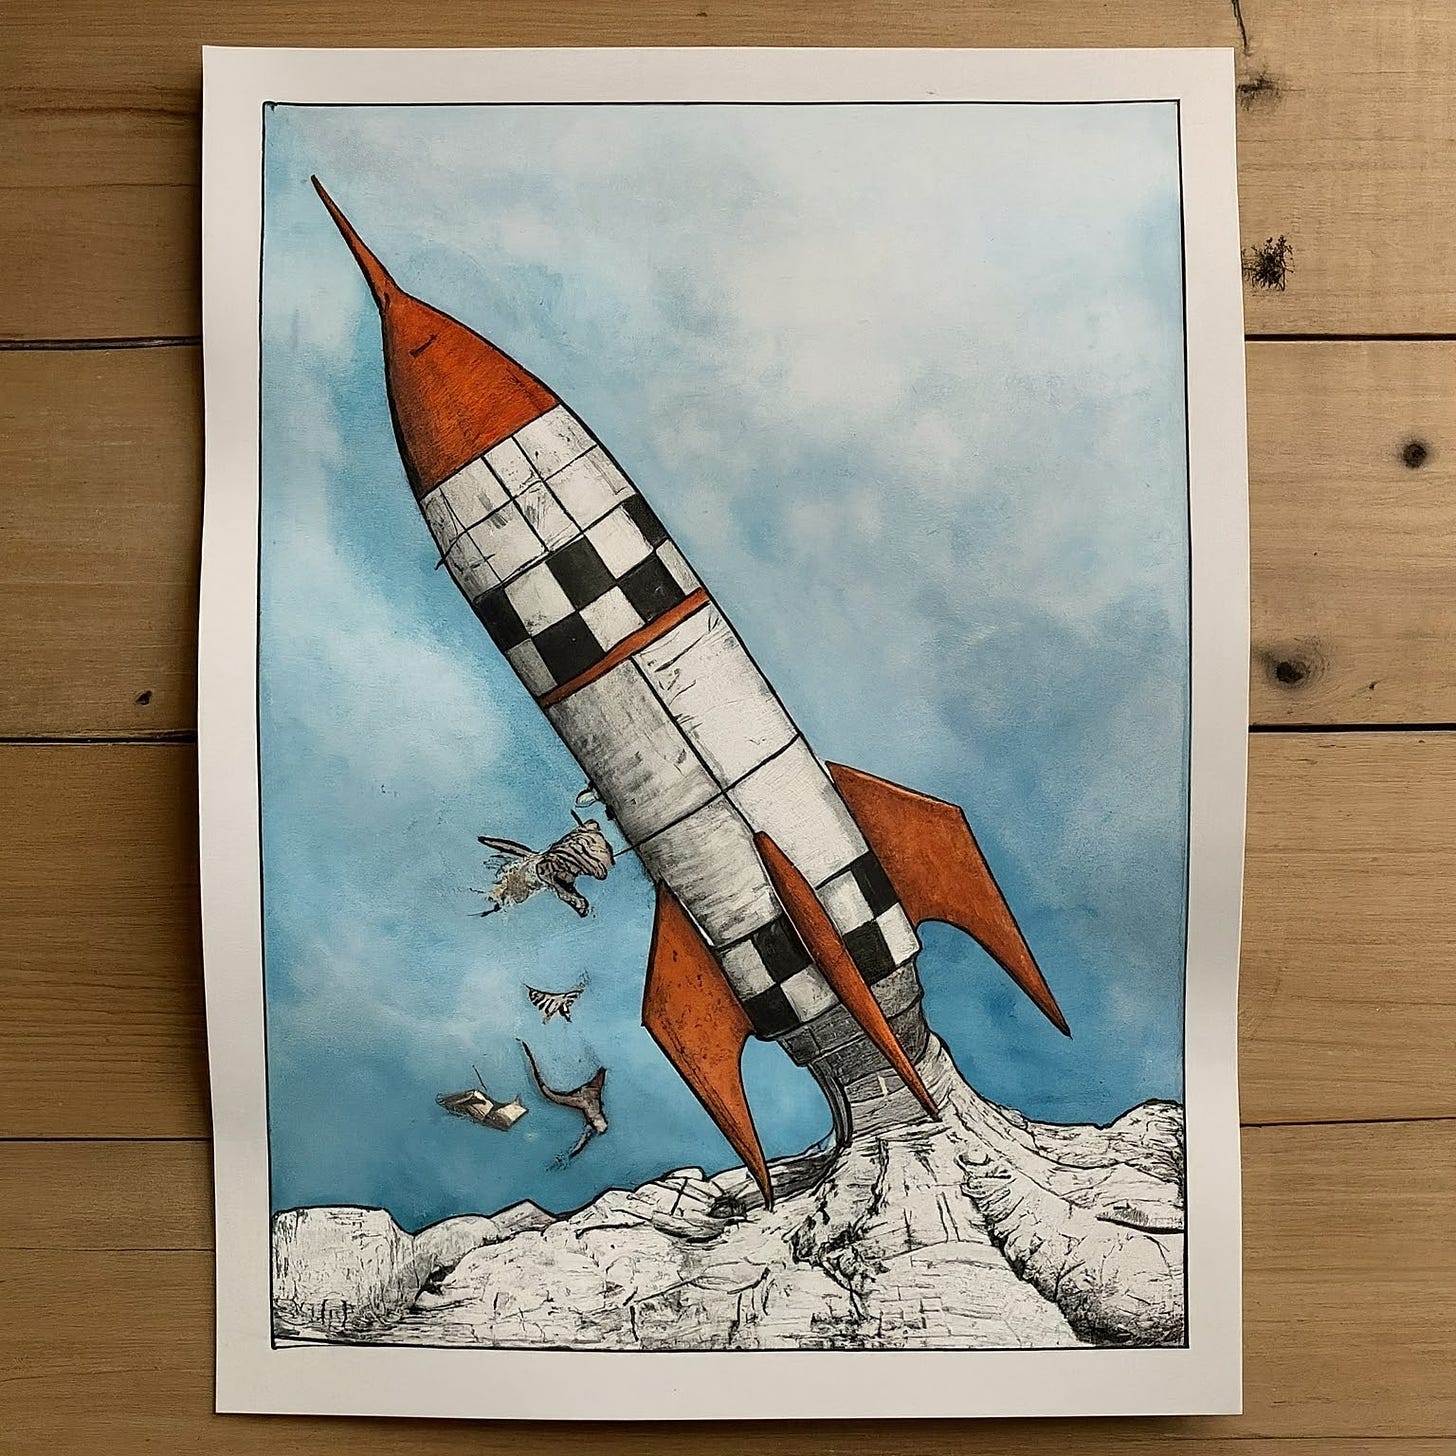 rocketship failing to launch